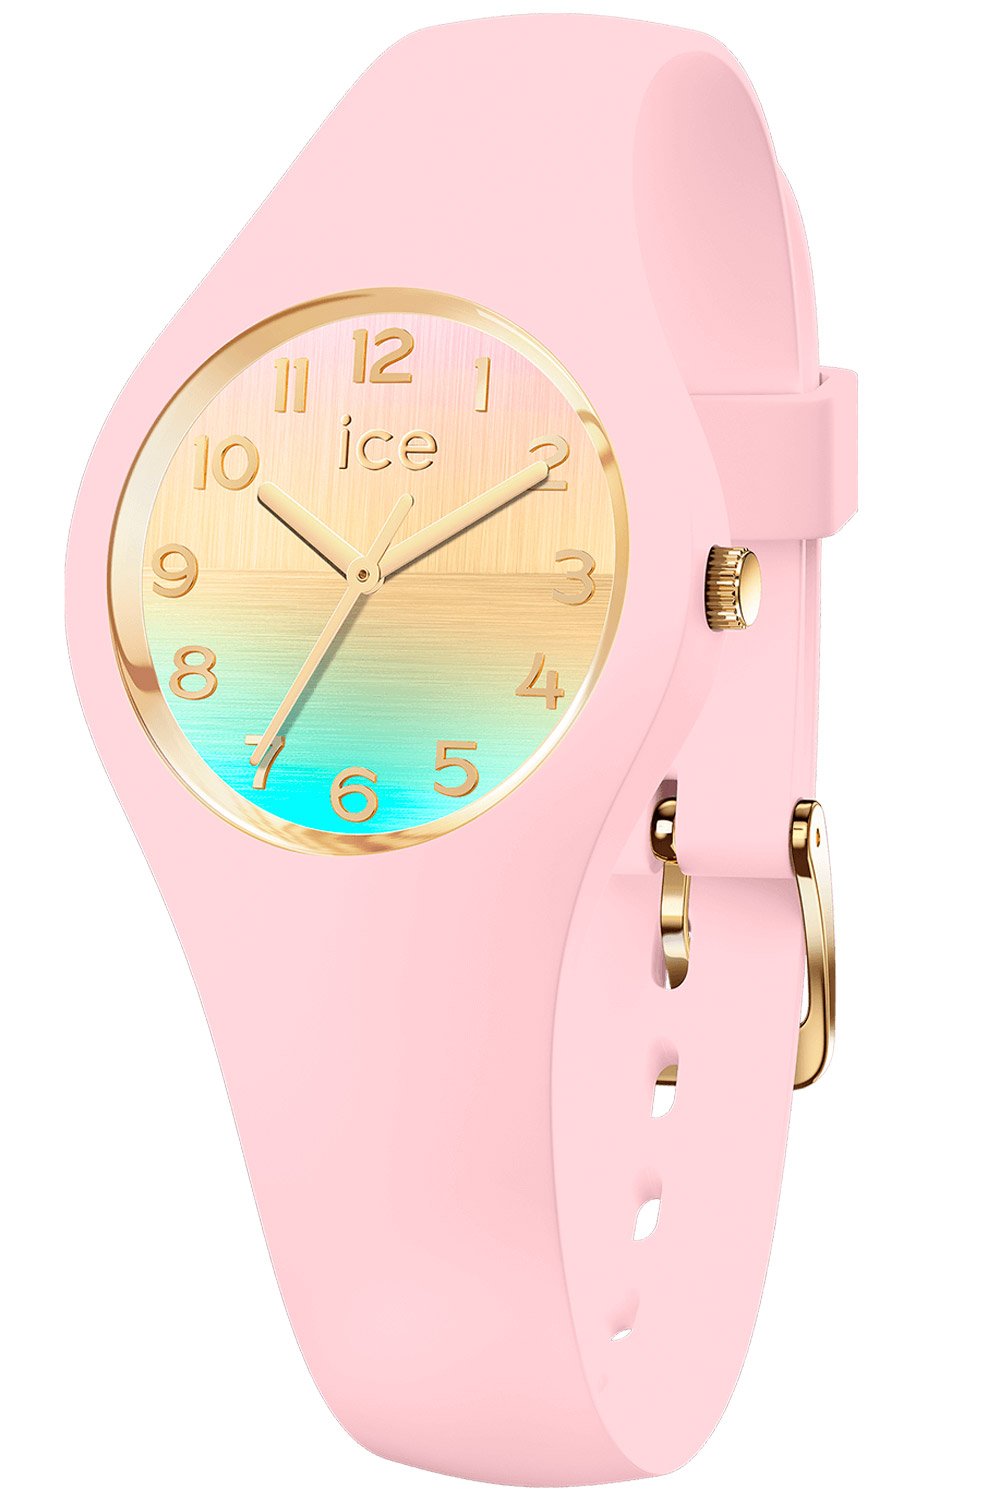 Ice-Watch Women\'s Watch Pink 021432 • Horizon uhrcenter ICE XS Girly